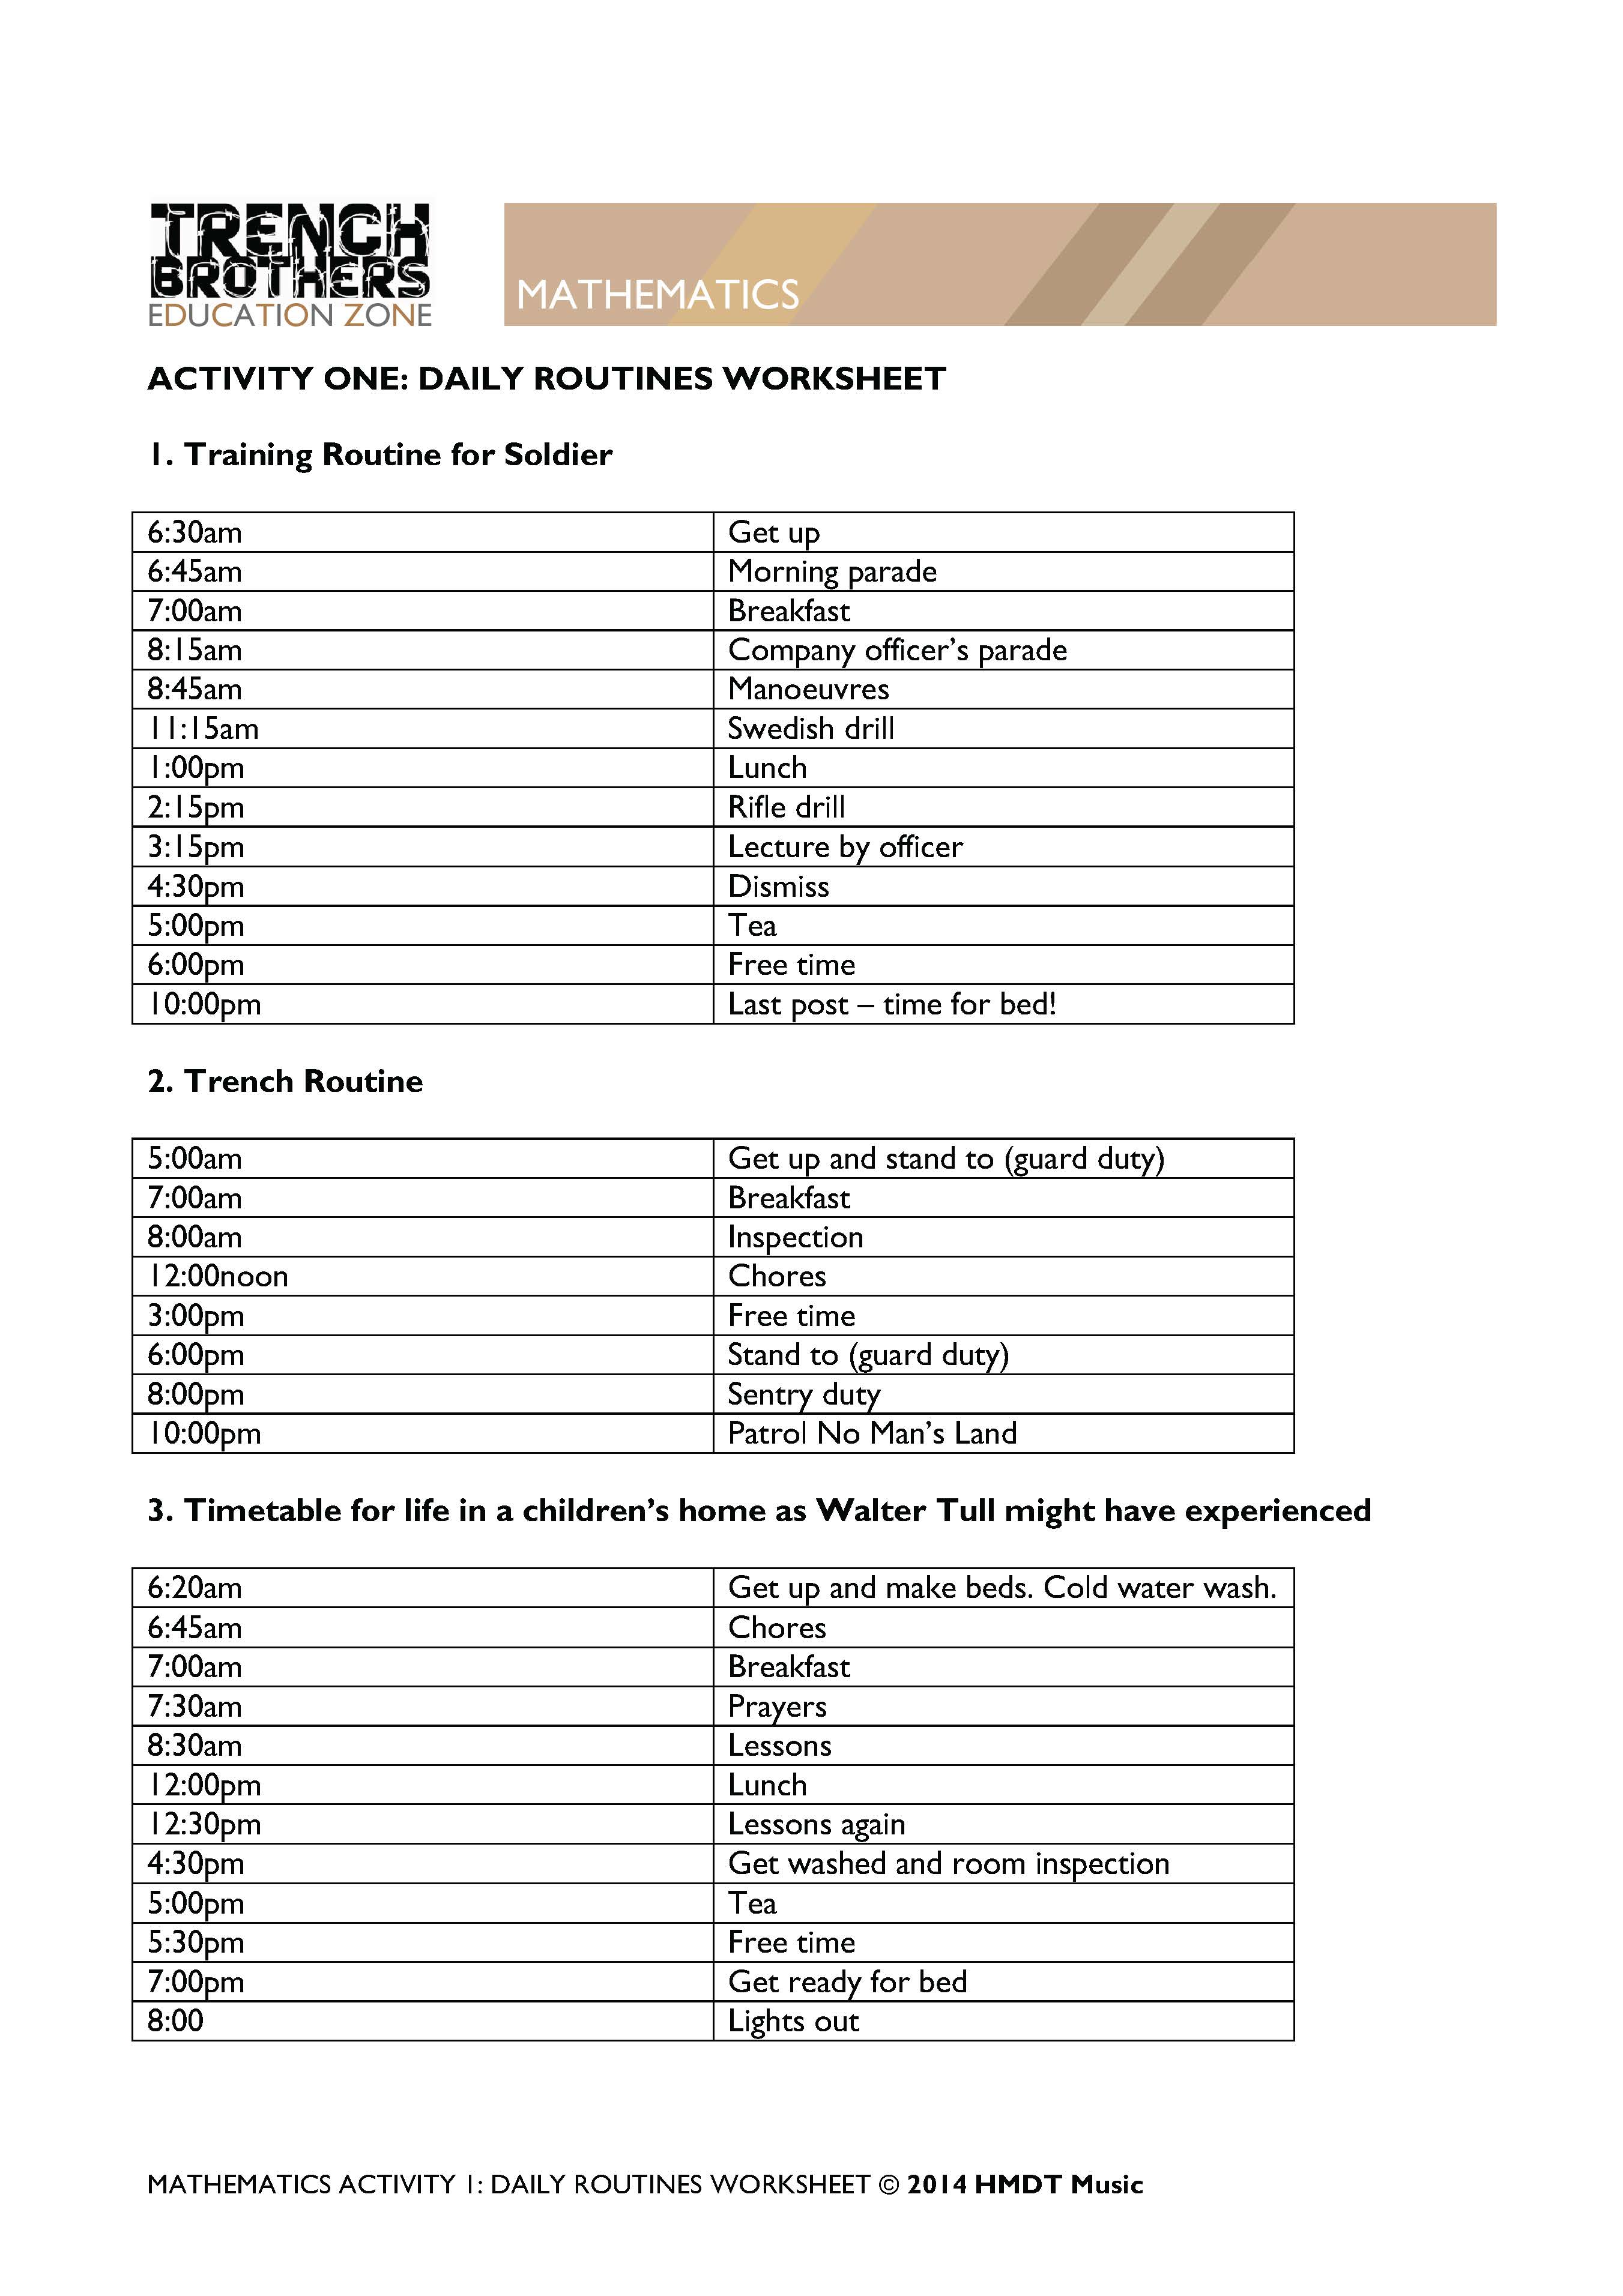 preparing-for-usefulness-english-8-worksheets